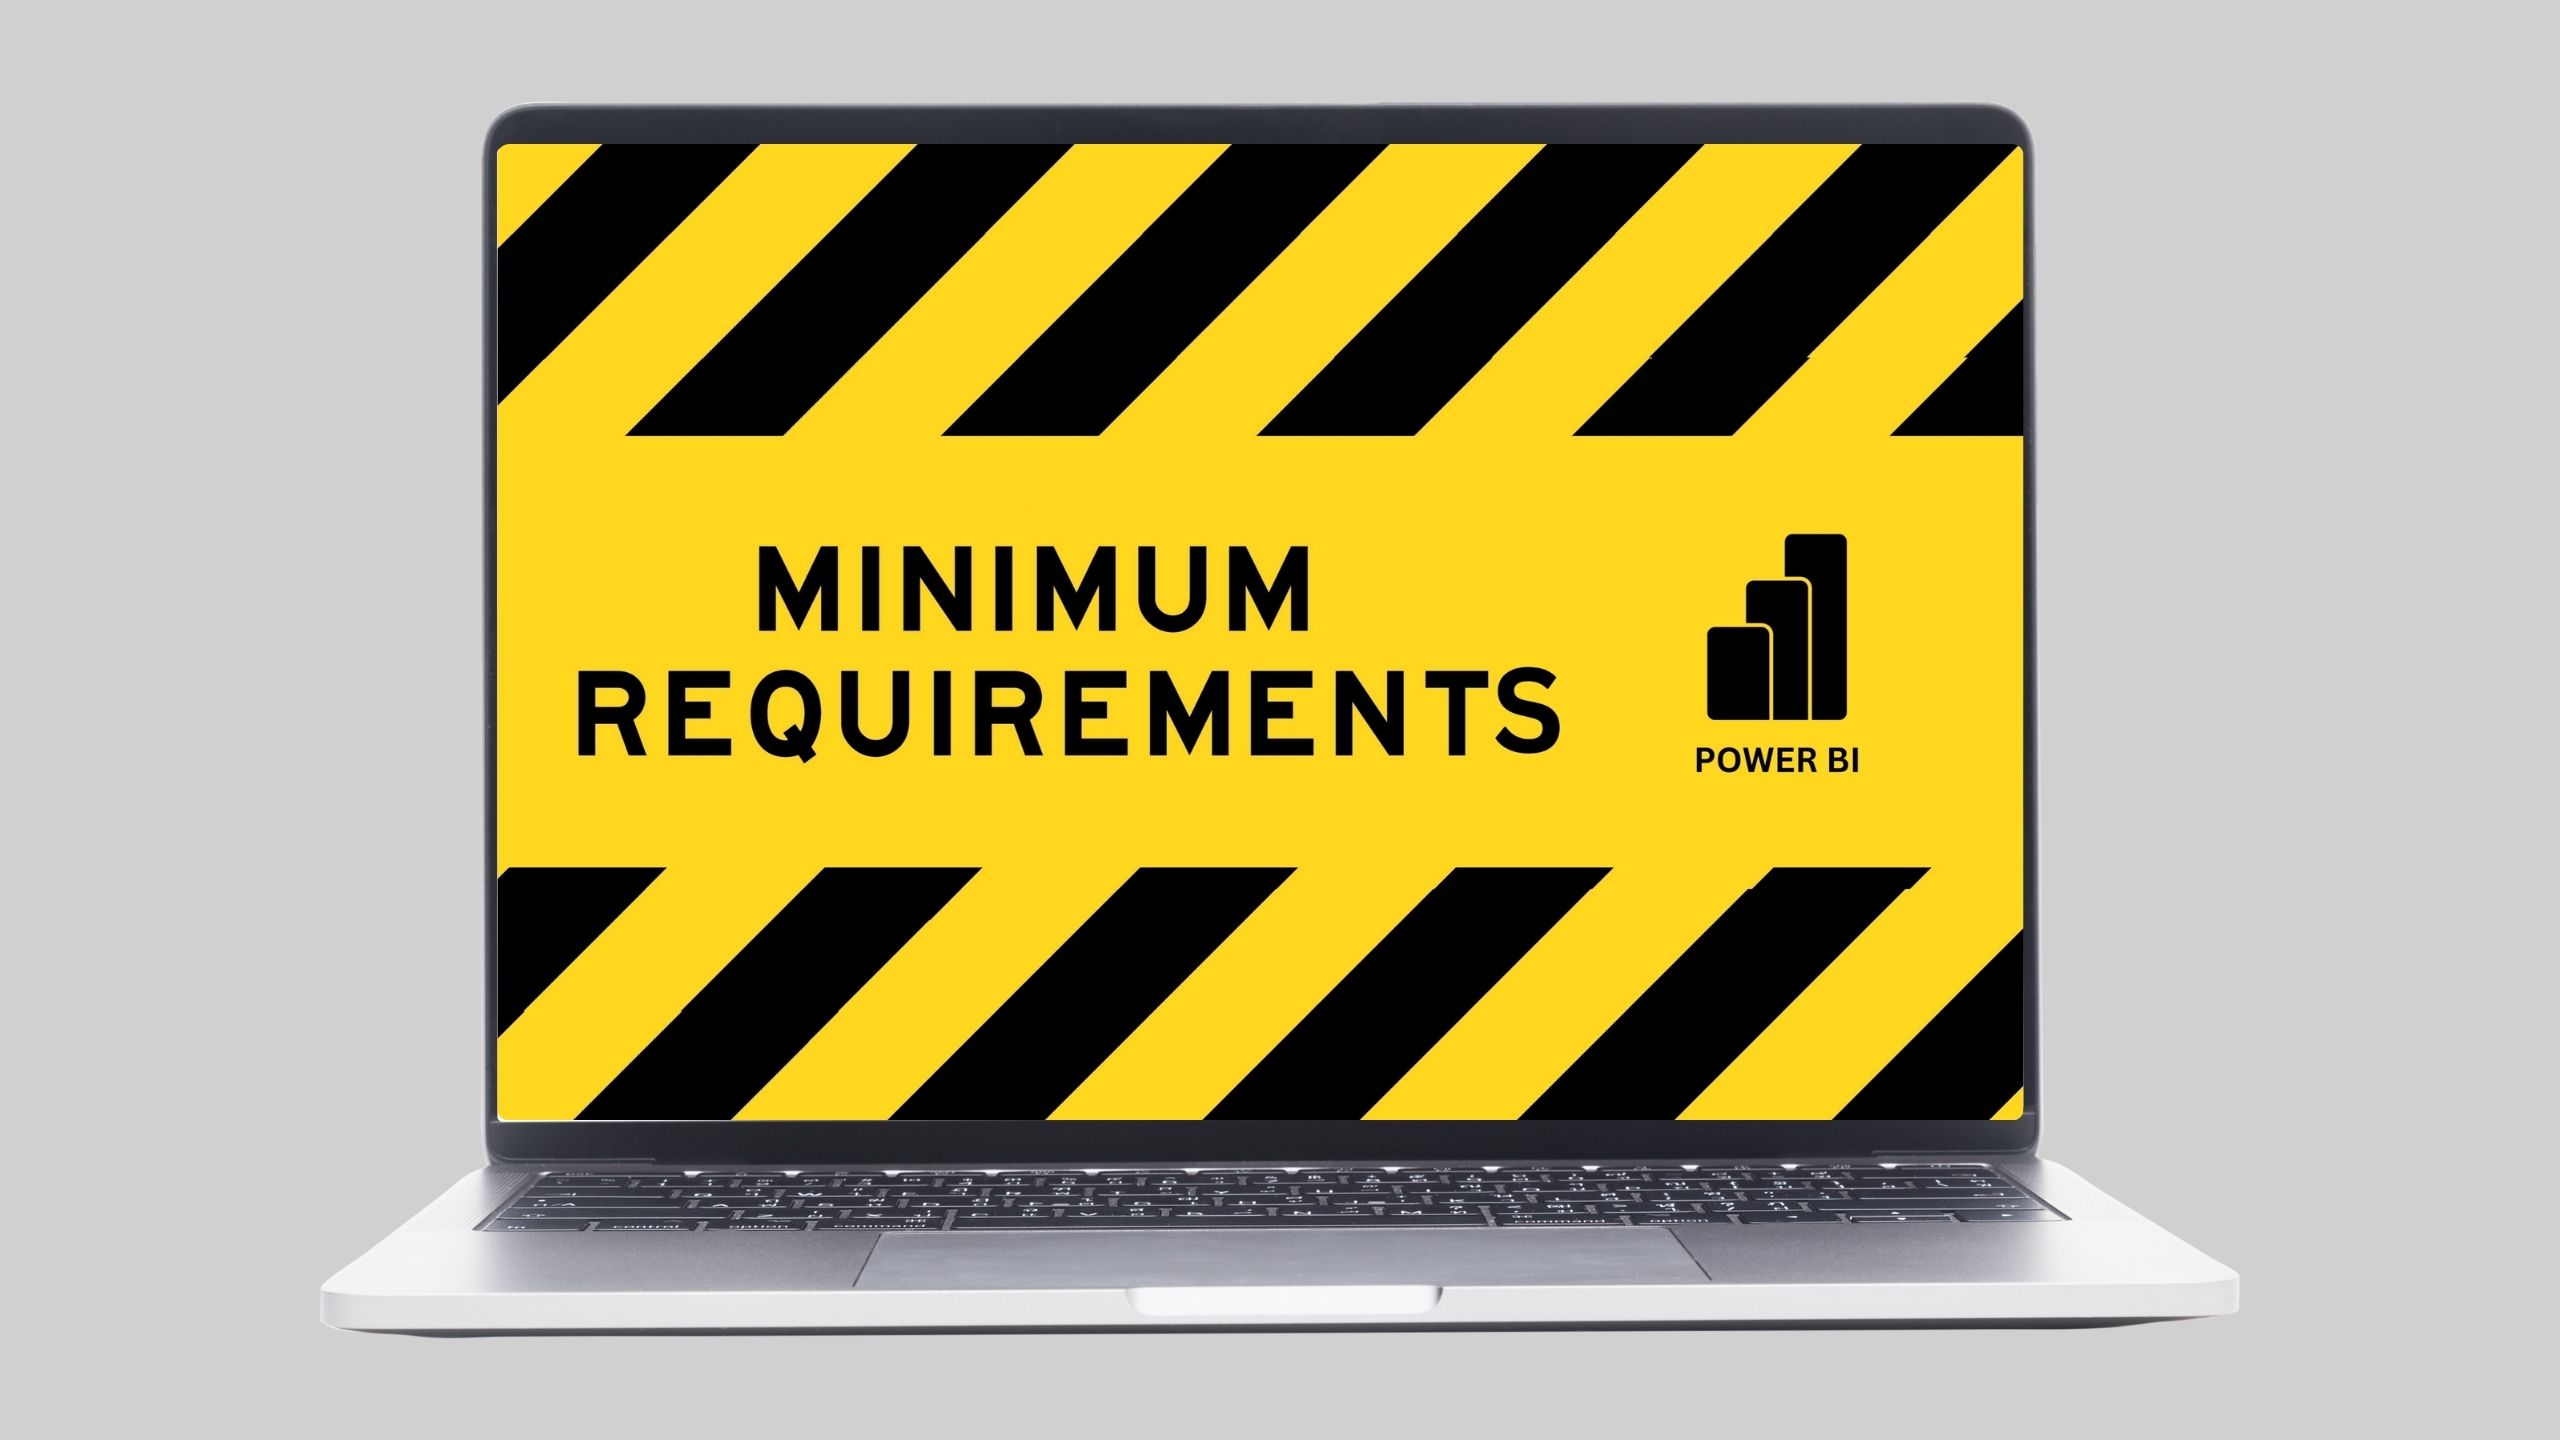 The REAL Minimum Requirements for Power BI Desktop